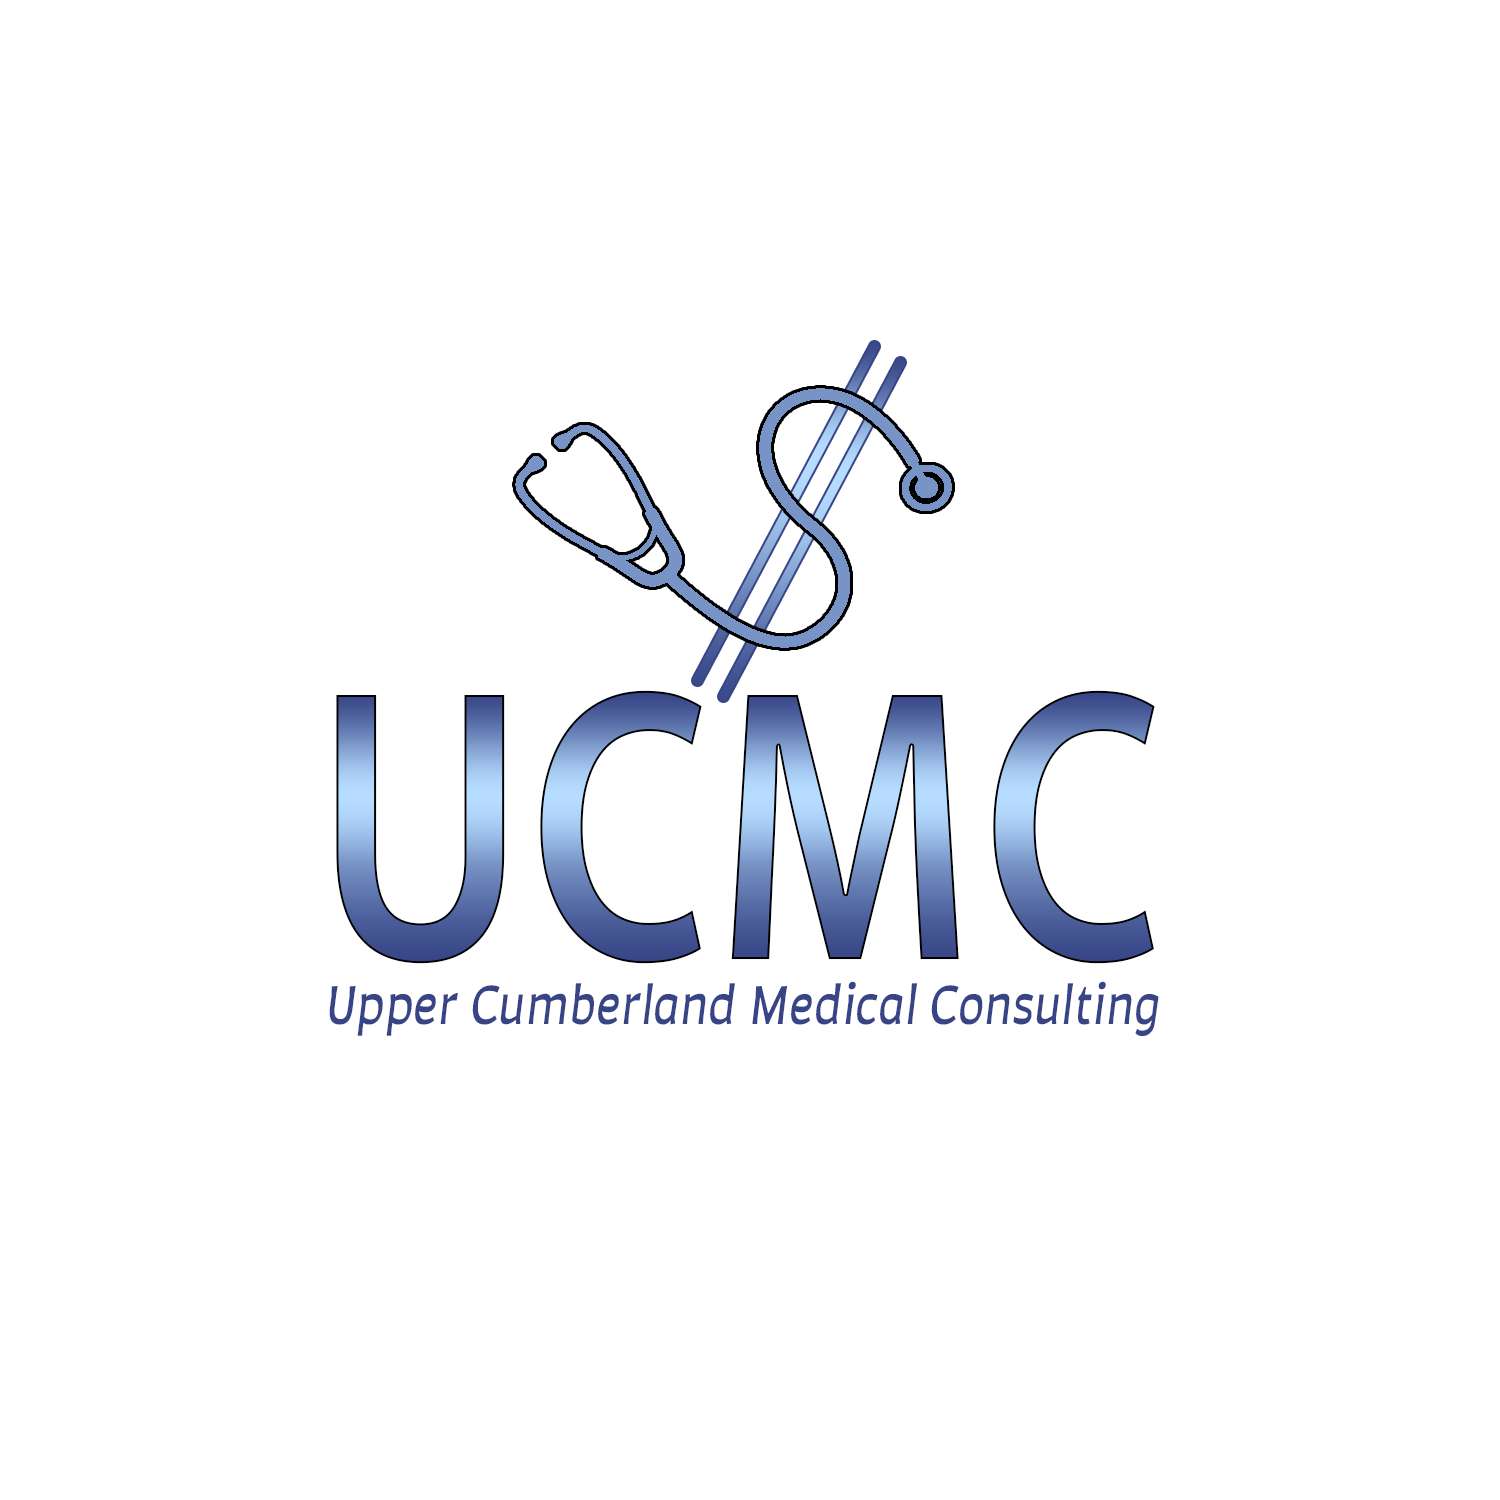 Upper Cumberland Medical Consulting